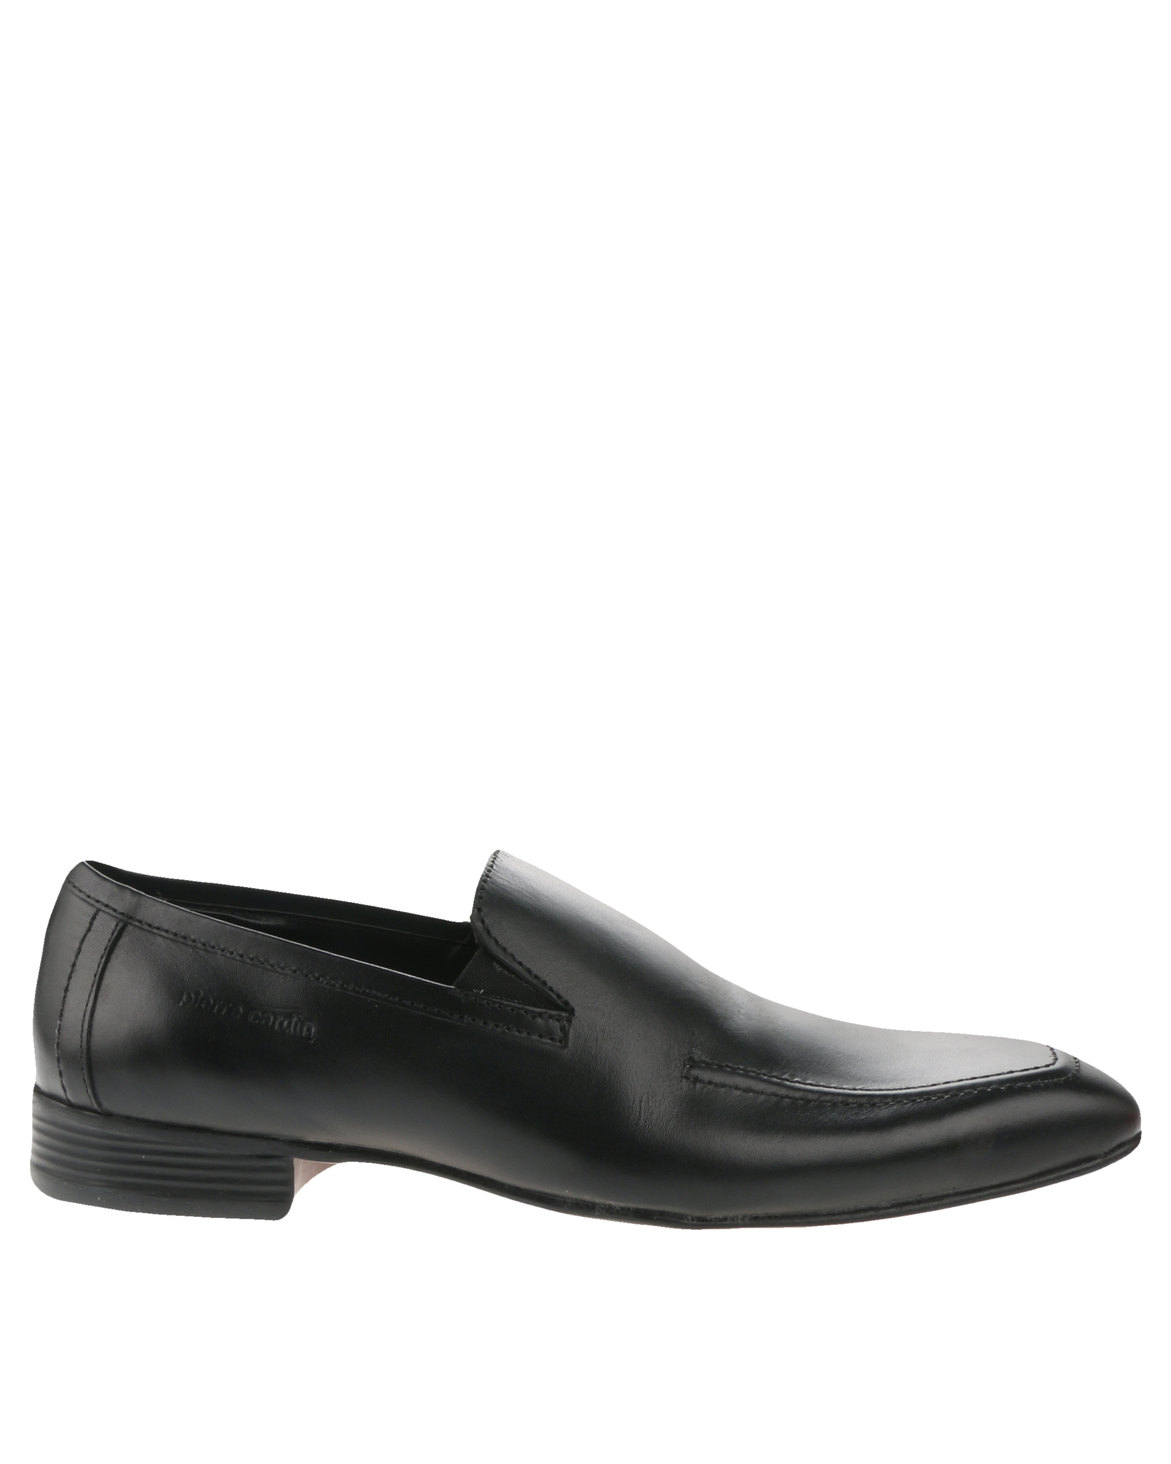 Pierre Cardin Classic Leather Slip On Shoes Black | Zando